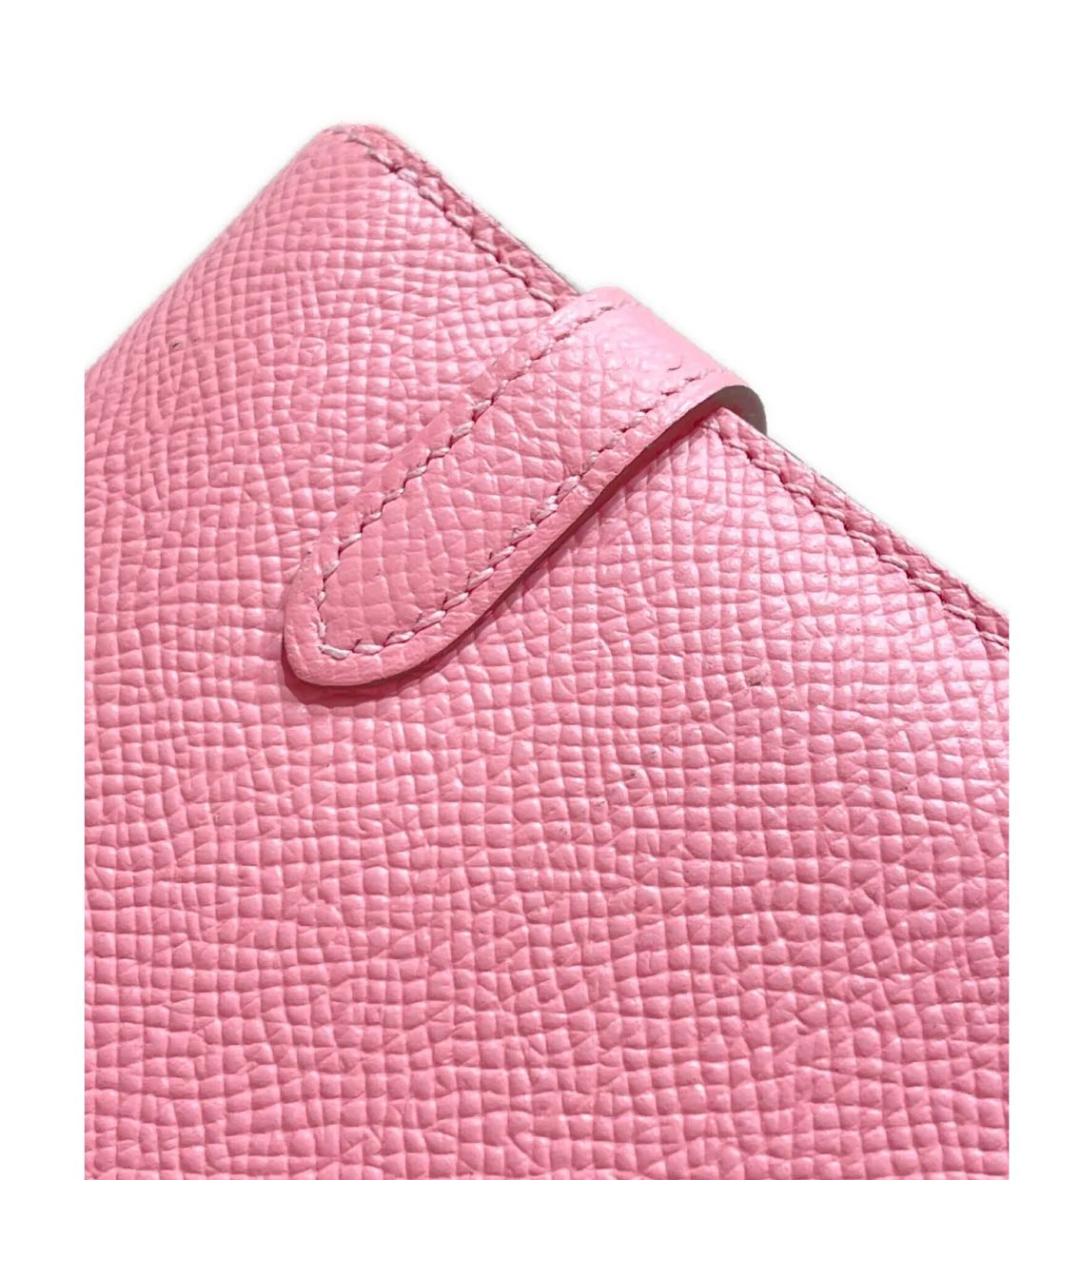 HERMES PRE-OWNED Розовая кожаная сумка с короткими ручками, фото 7